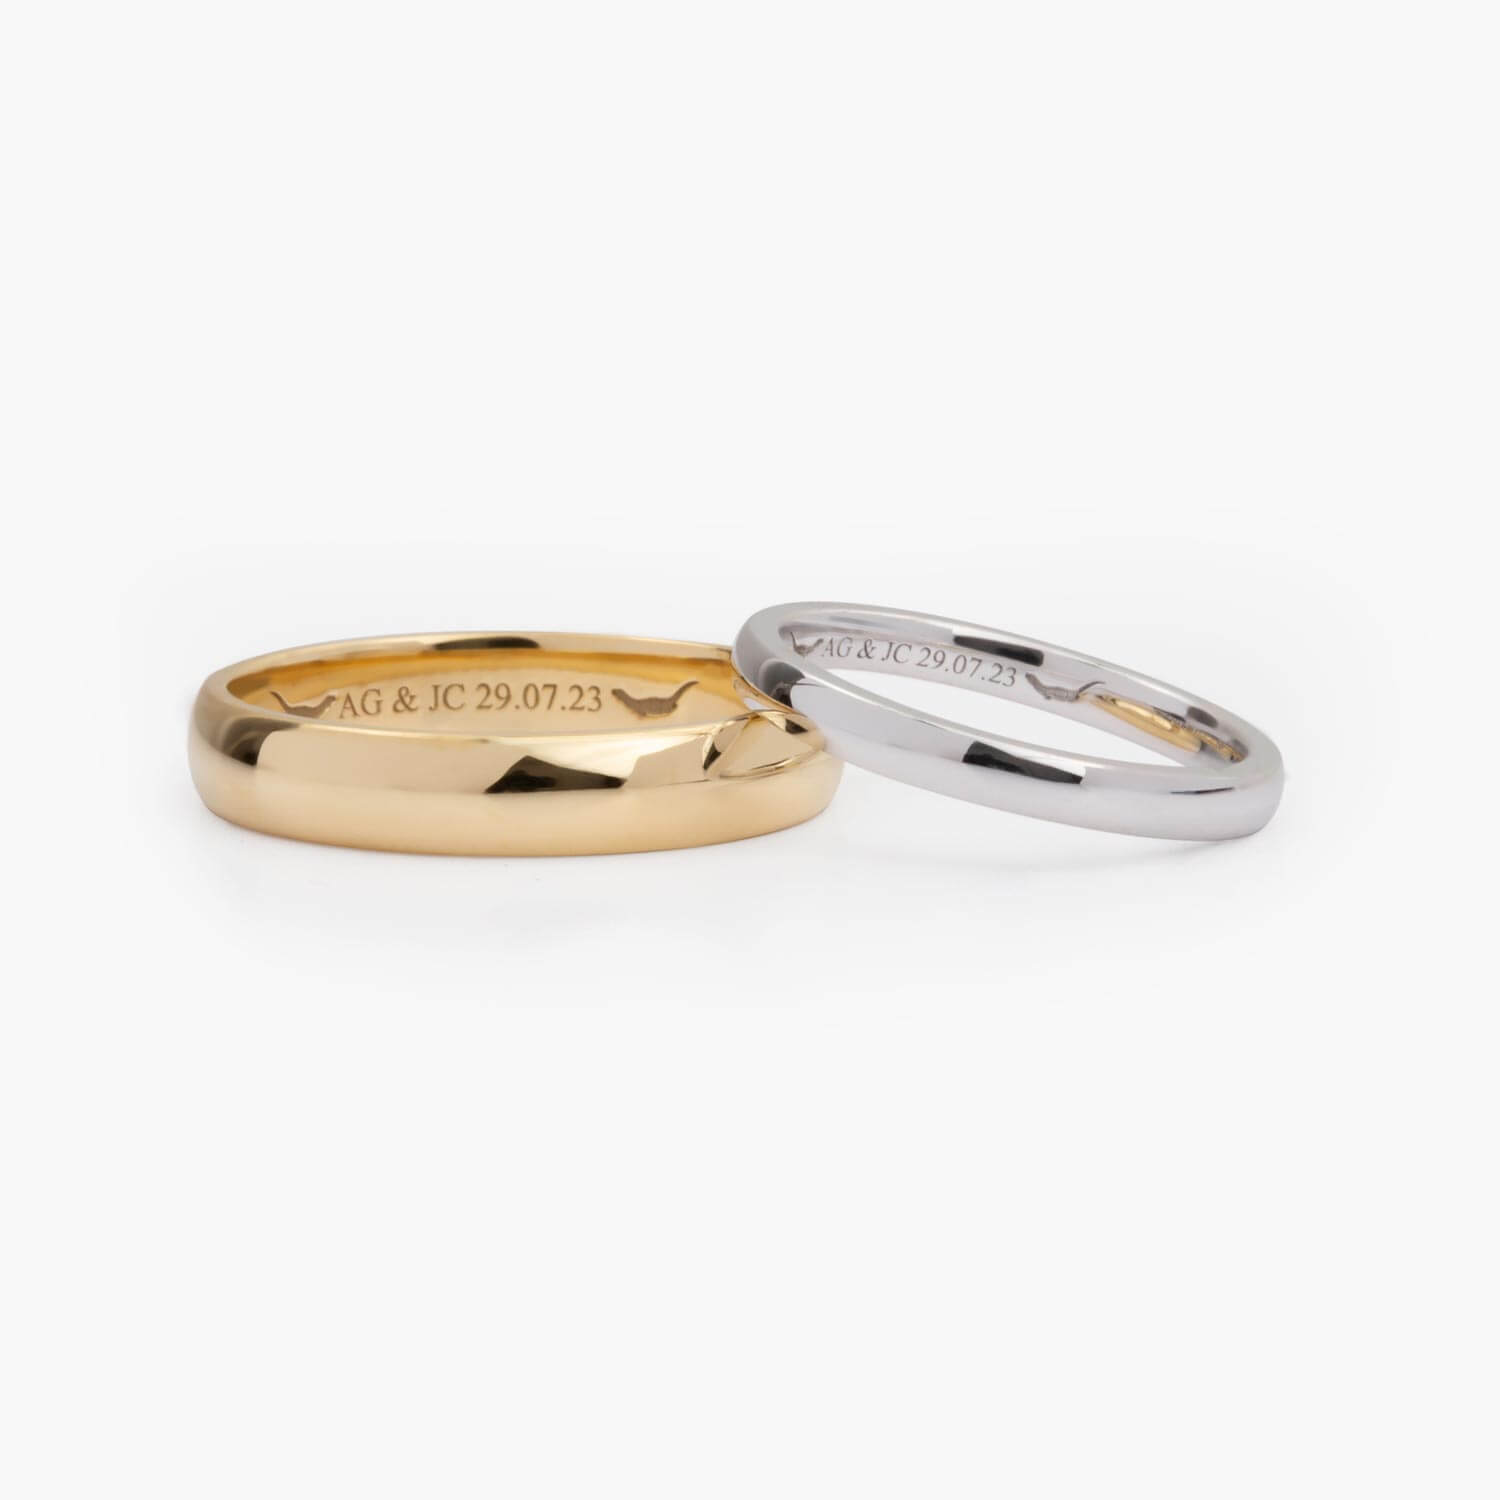 Laser engraved gold and platinum wedding rings